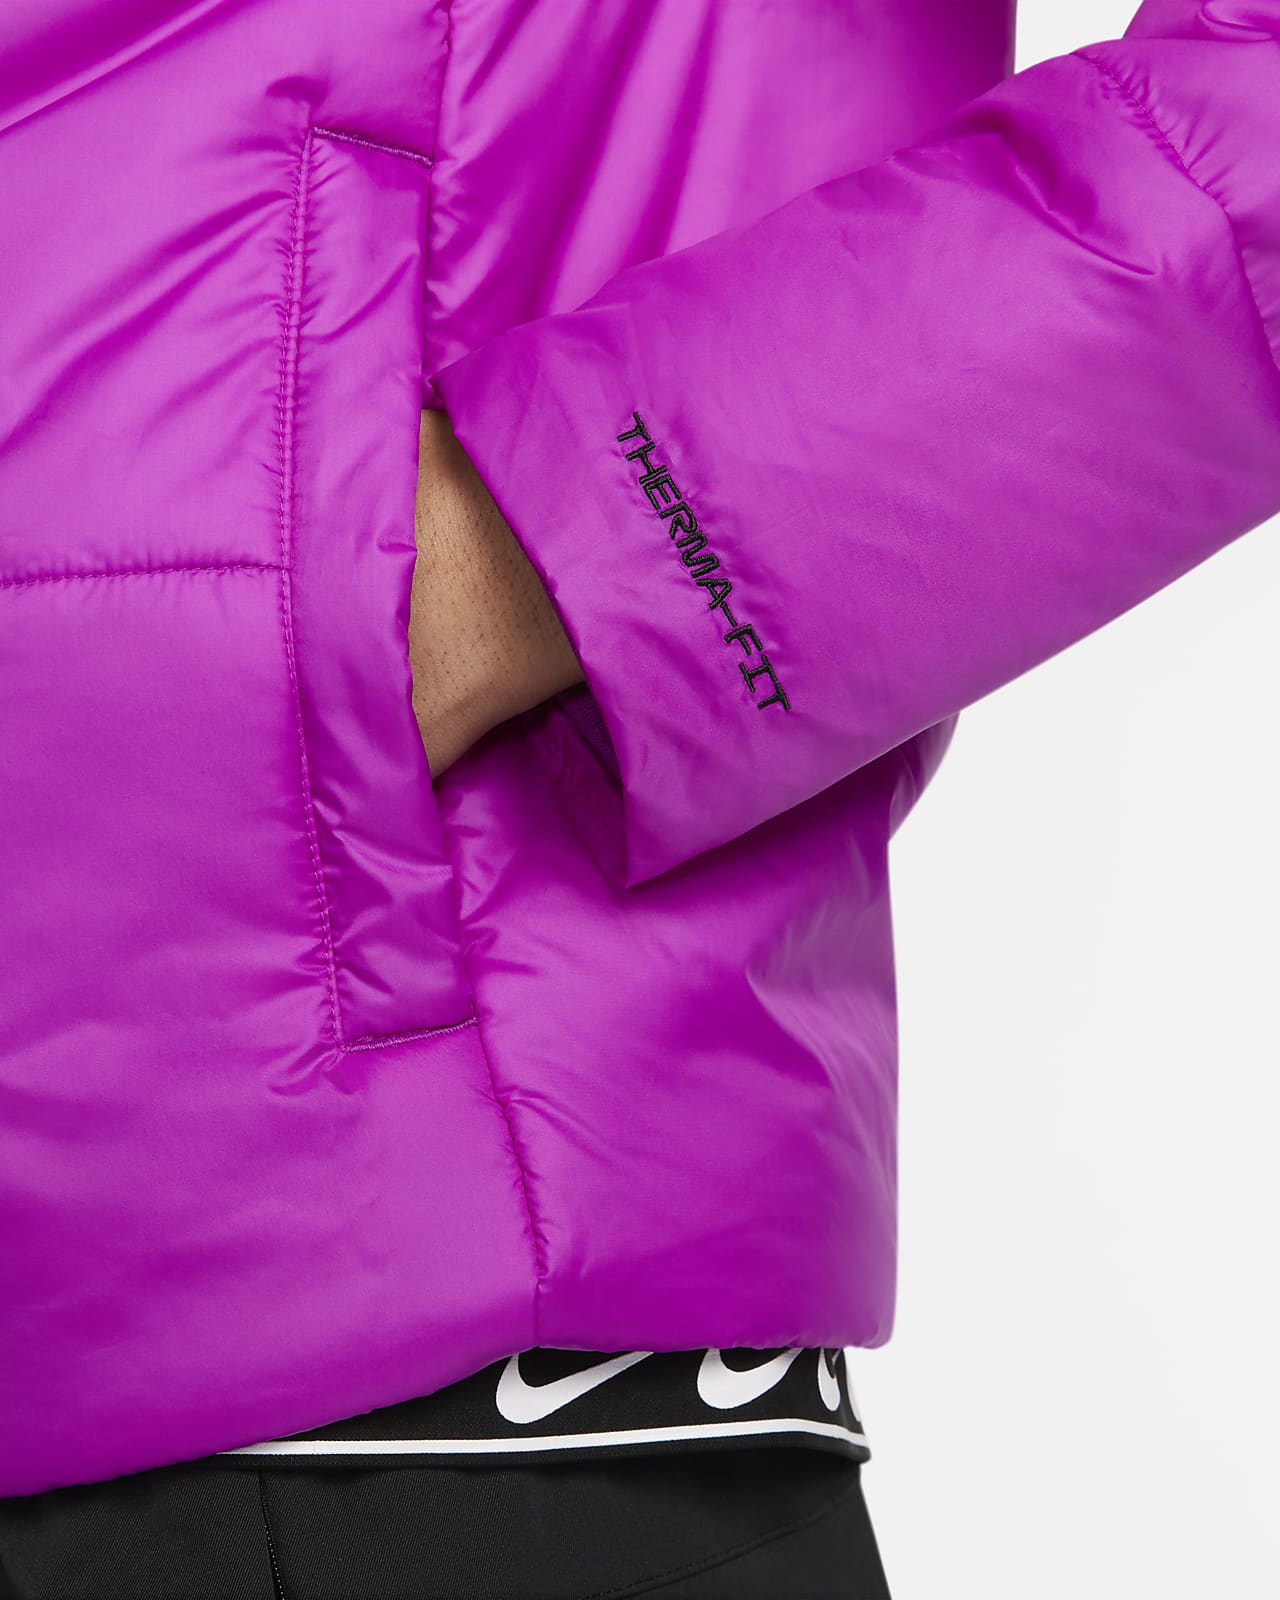 Nike Sportswear Therma-Fit Repel Windrunner Jacket